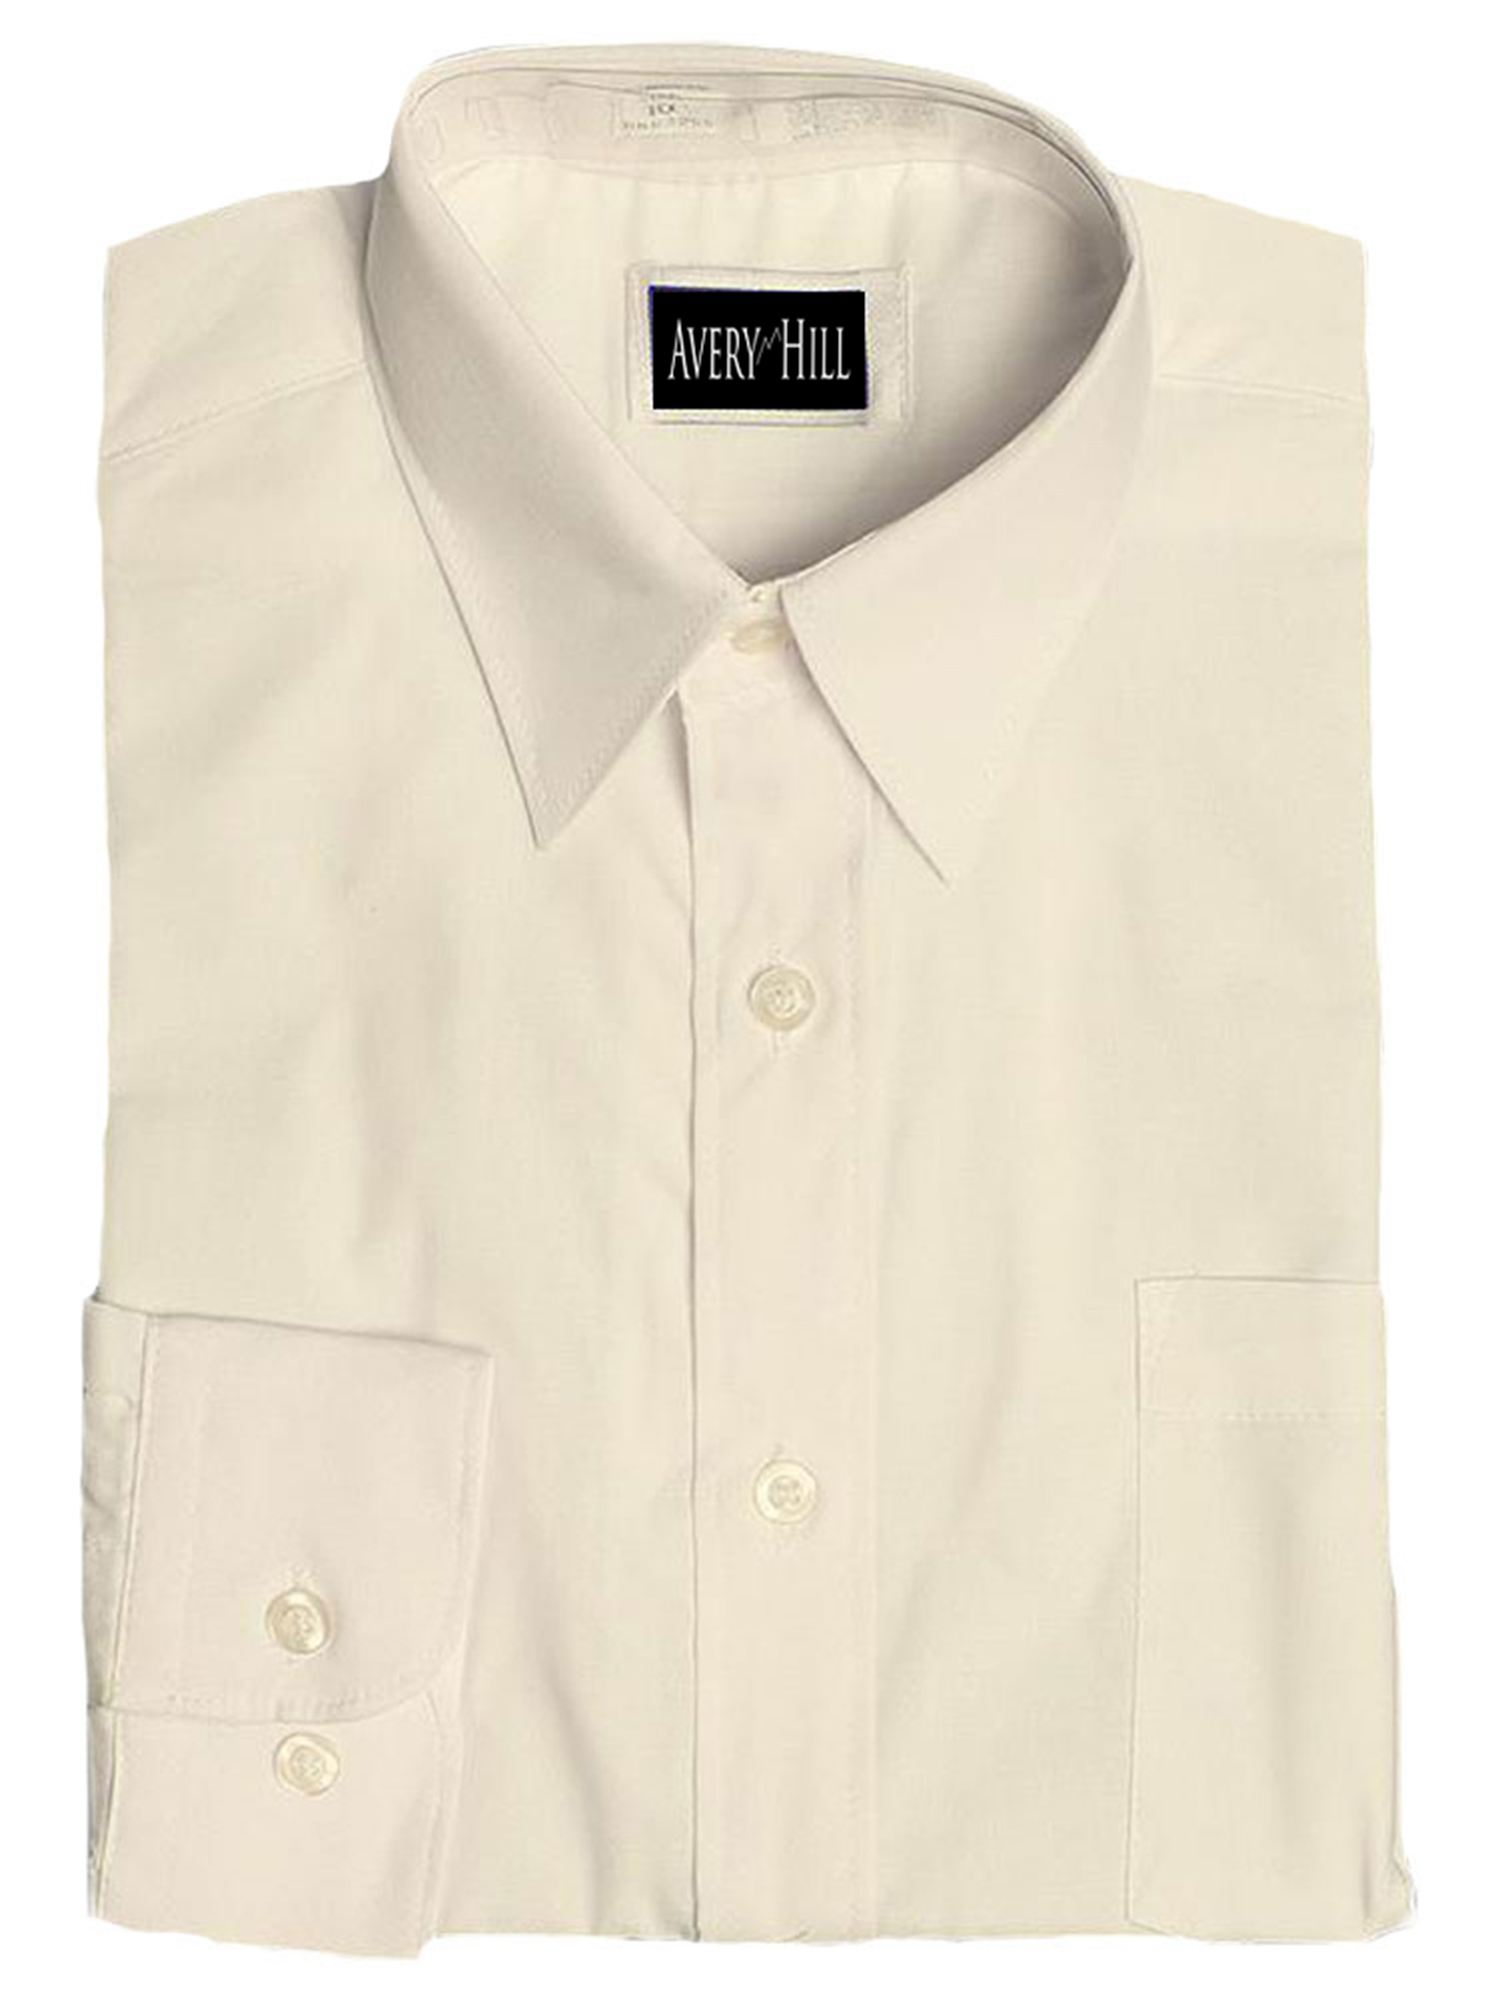 Boys White or Ivory Long Sleeve Wrinkle Resistant Dress Shirt IV 18X